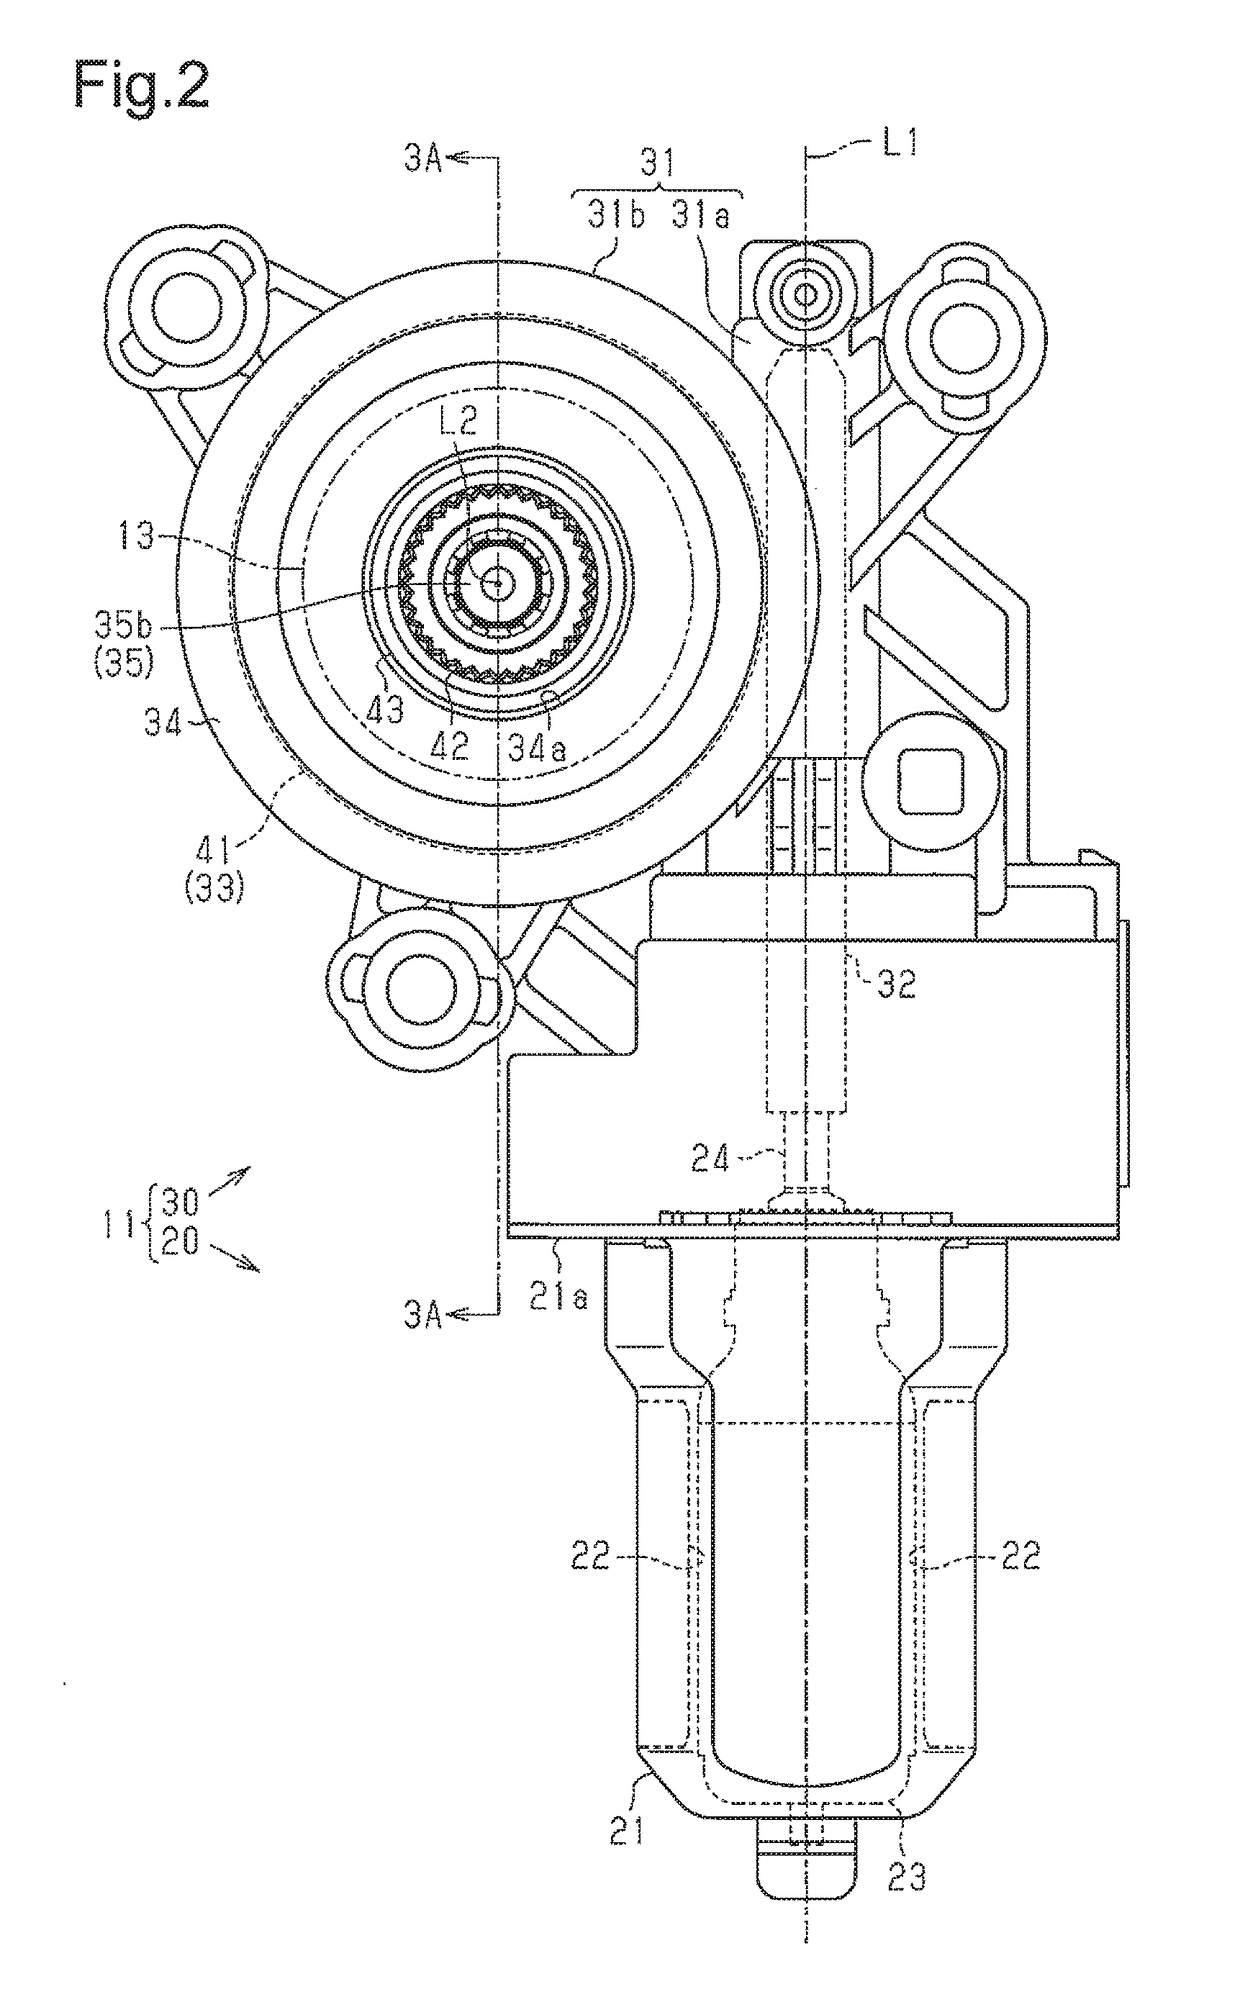 Geared motor and power window device